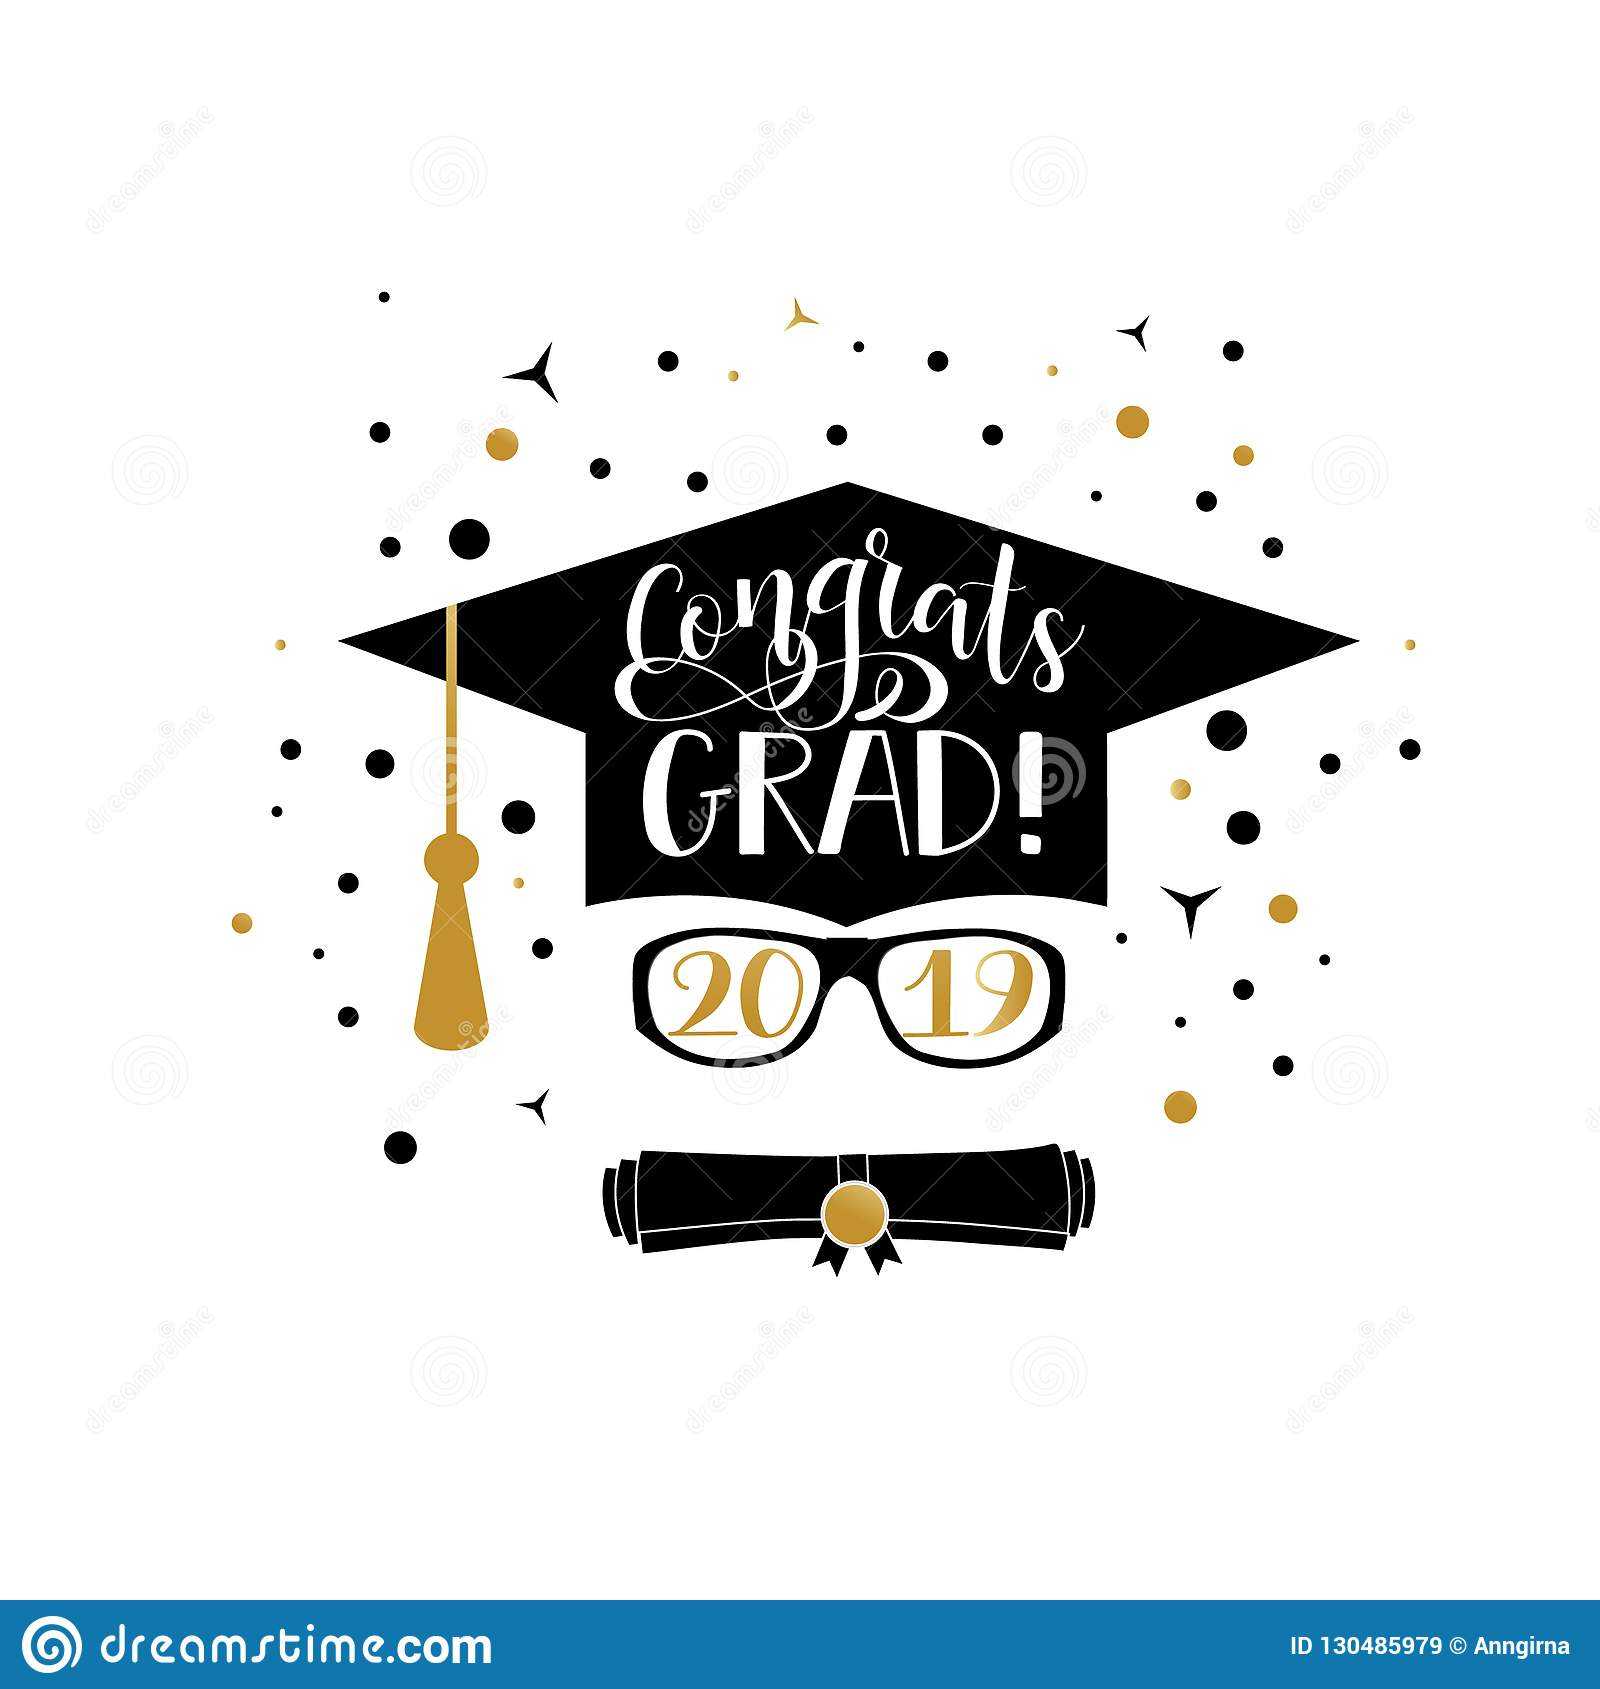 Congrats Grad 2019 Lettering. Congratulations Graduate Within Graduation Banner Template